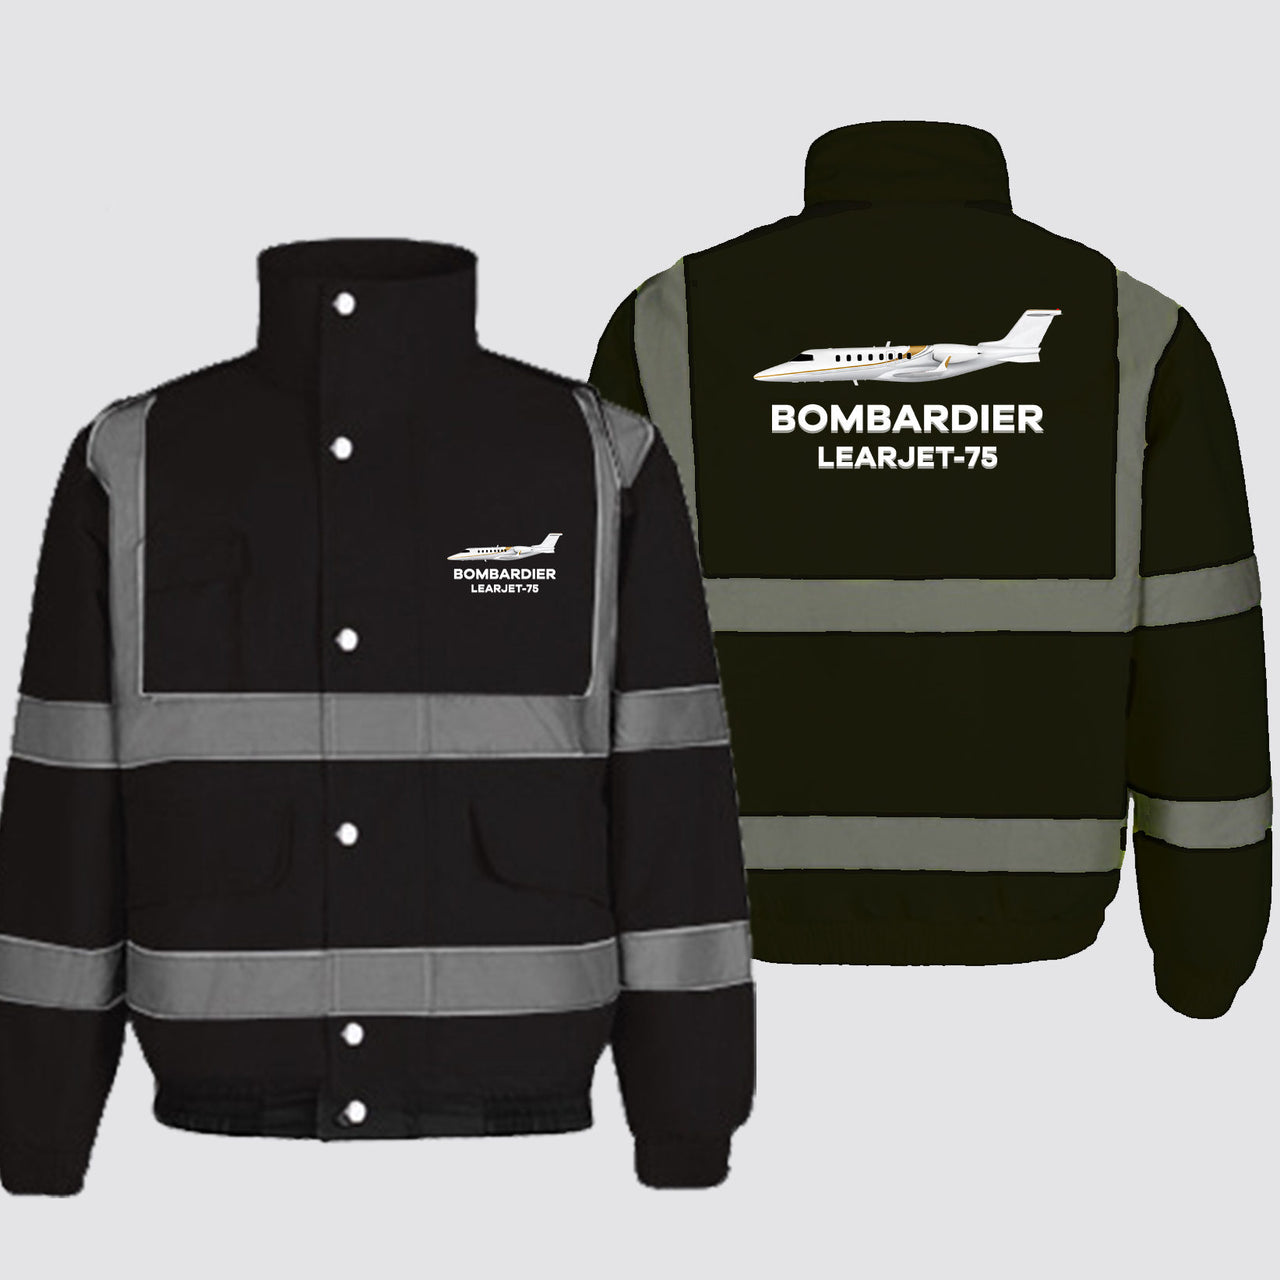 The Bombardier Learjet 75 Designed Reflective Winter Jackets